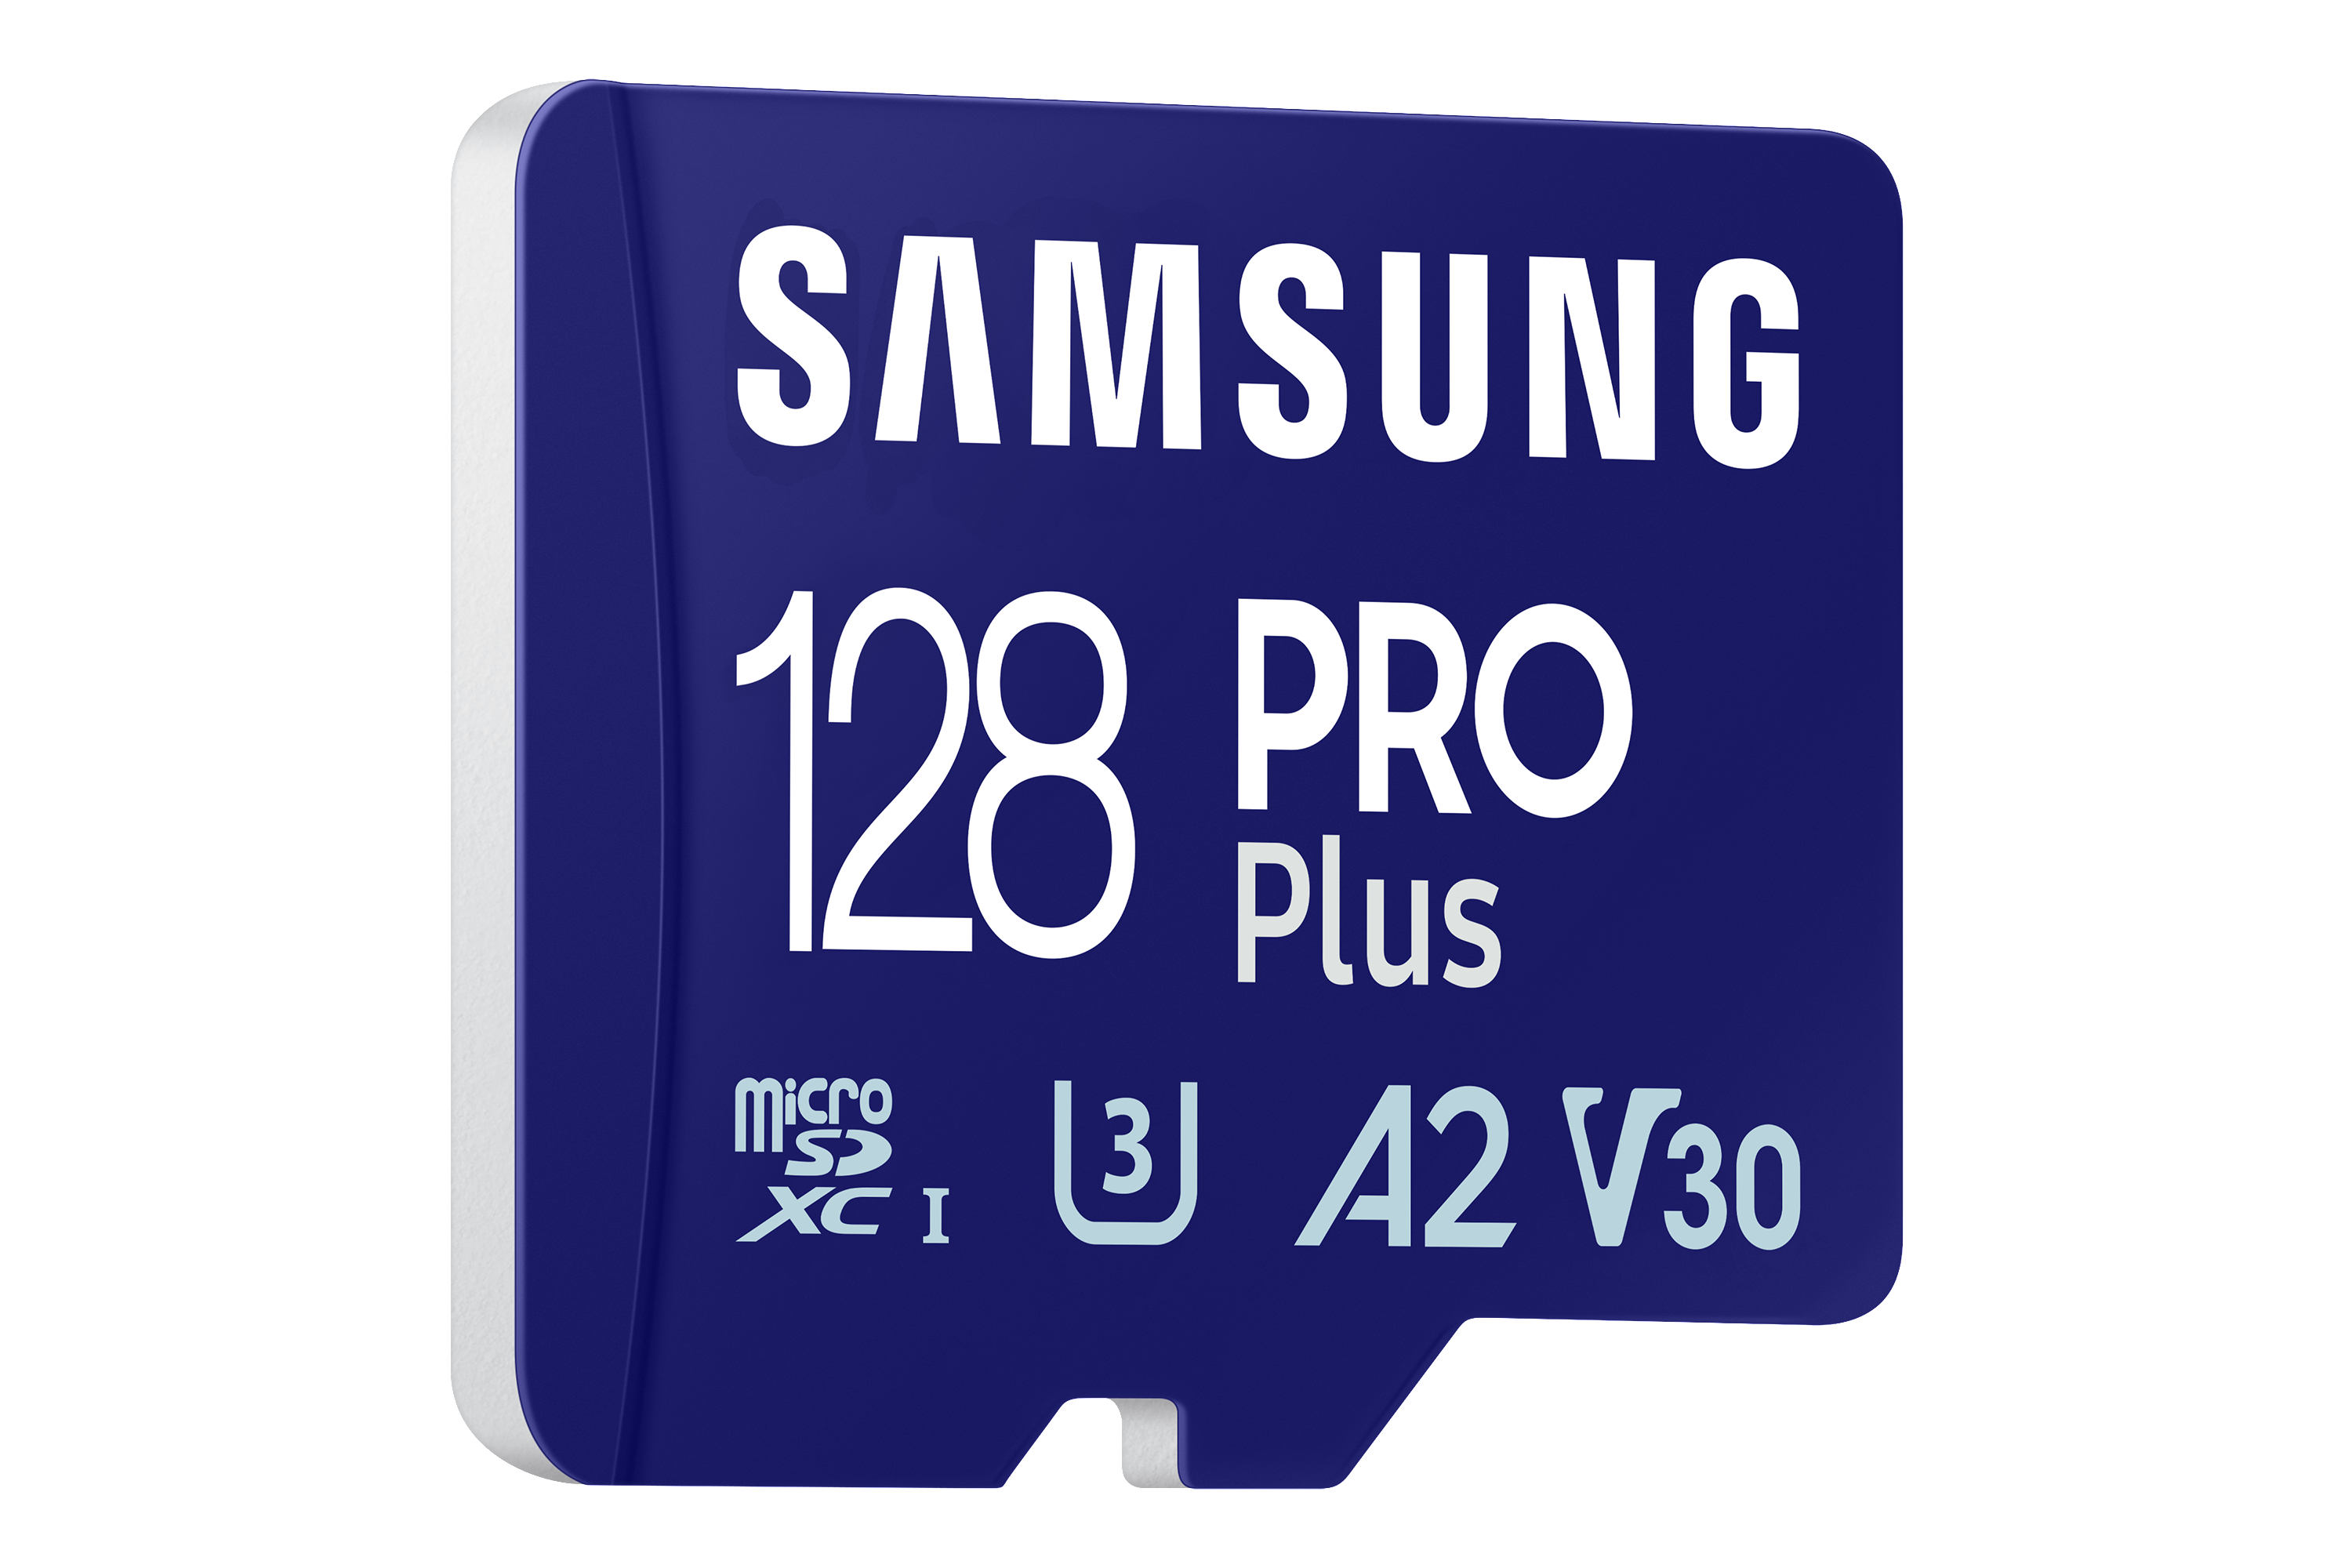 SAMSUNG PRO (2023) SD-Adapter, 180 mit Plus MB/s Speicherkarte, Micro-SDXC GB, 128